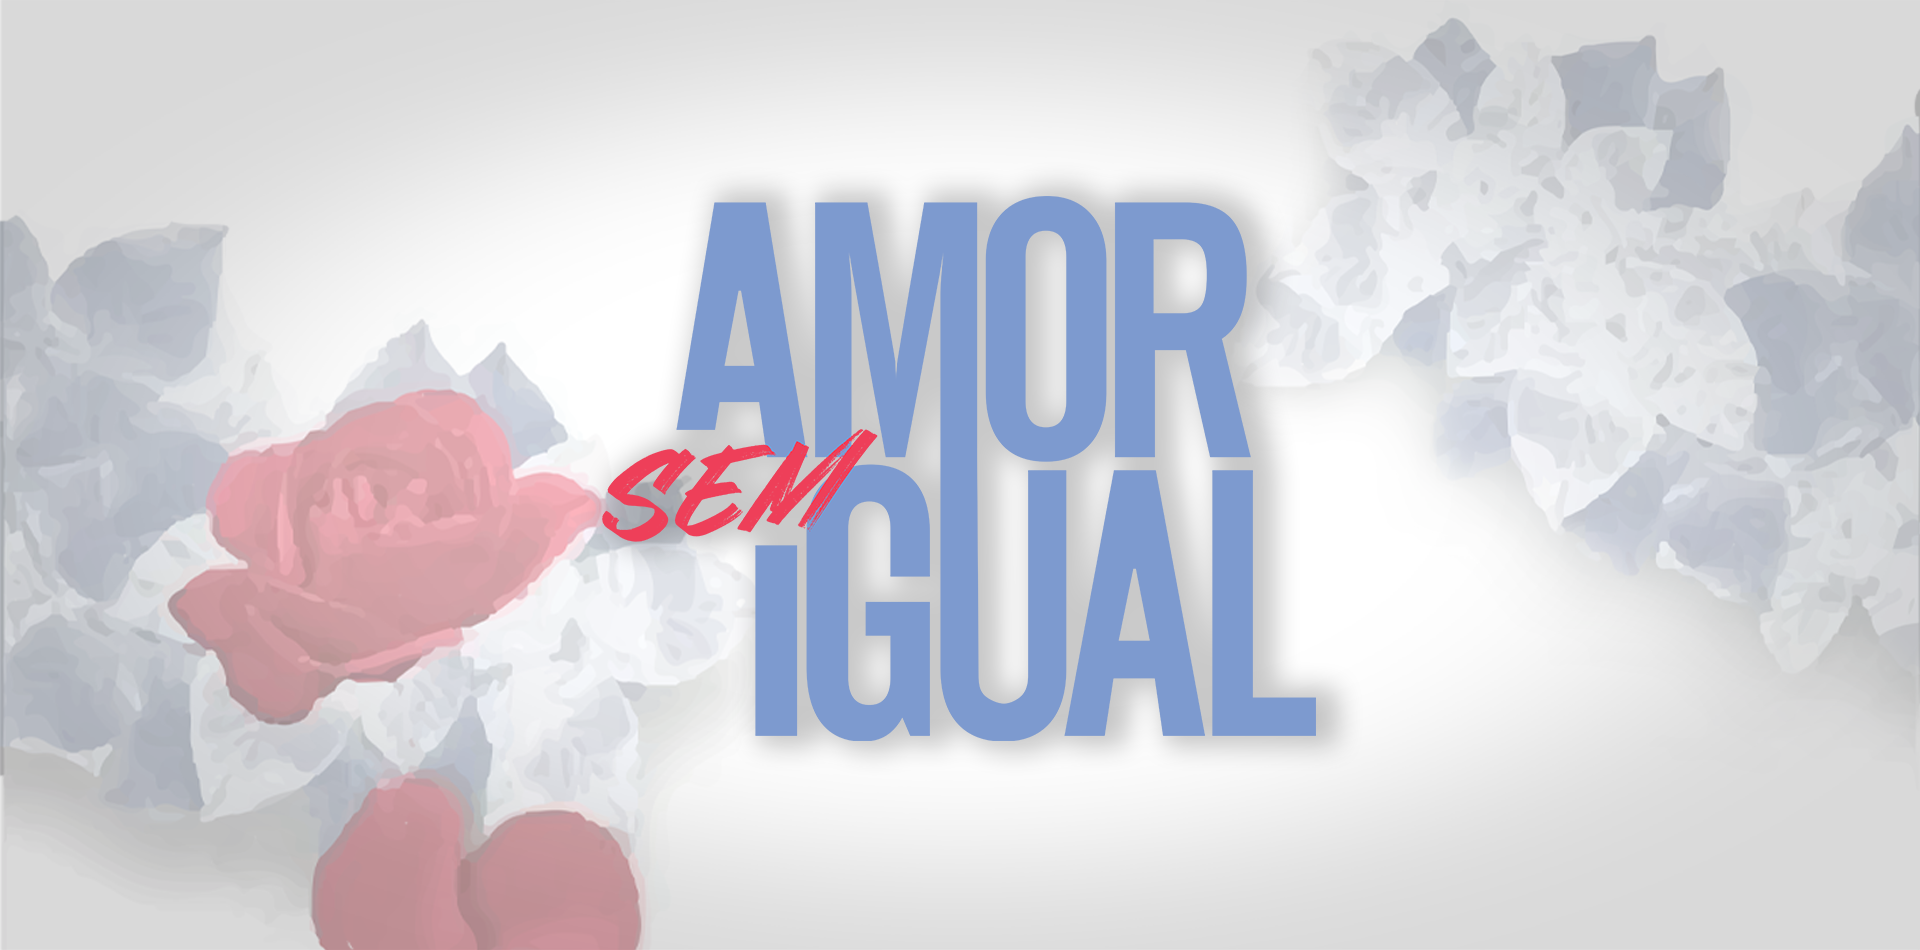 Foto - "Amor sem Igual" msica tema de abertura da novela da Record